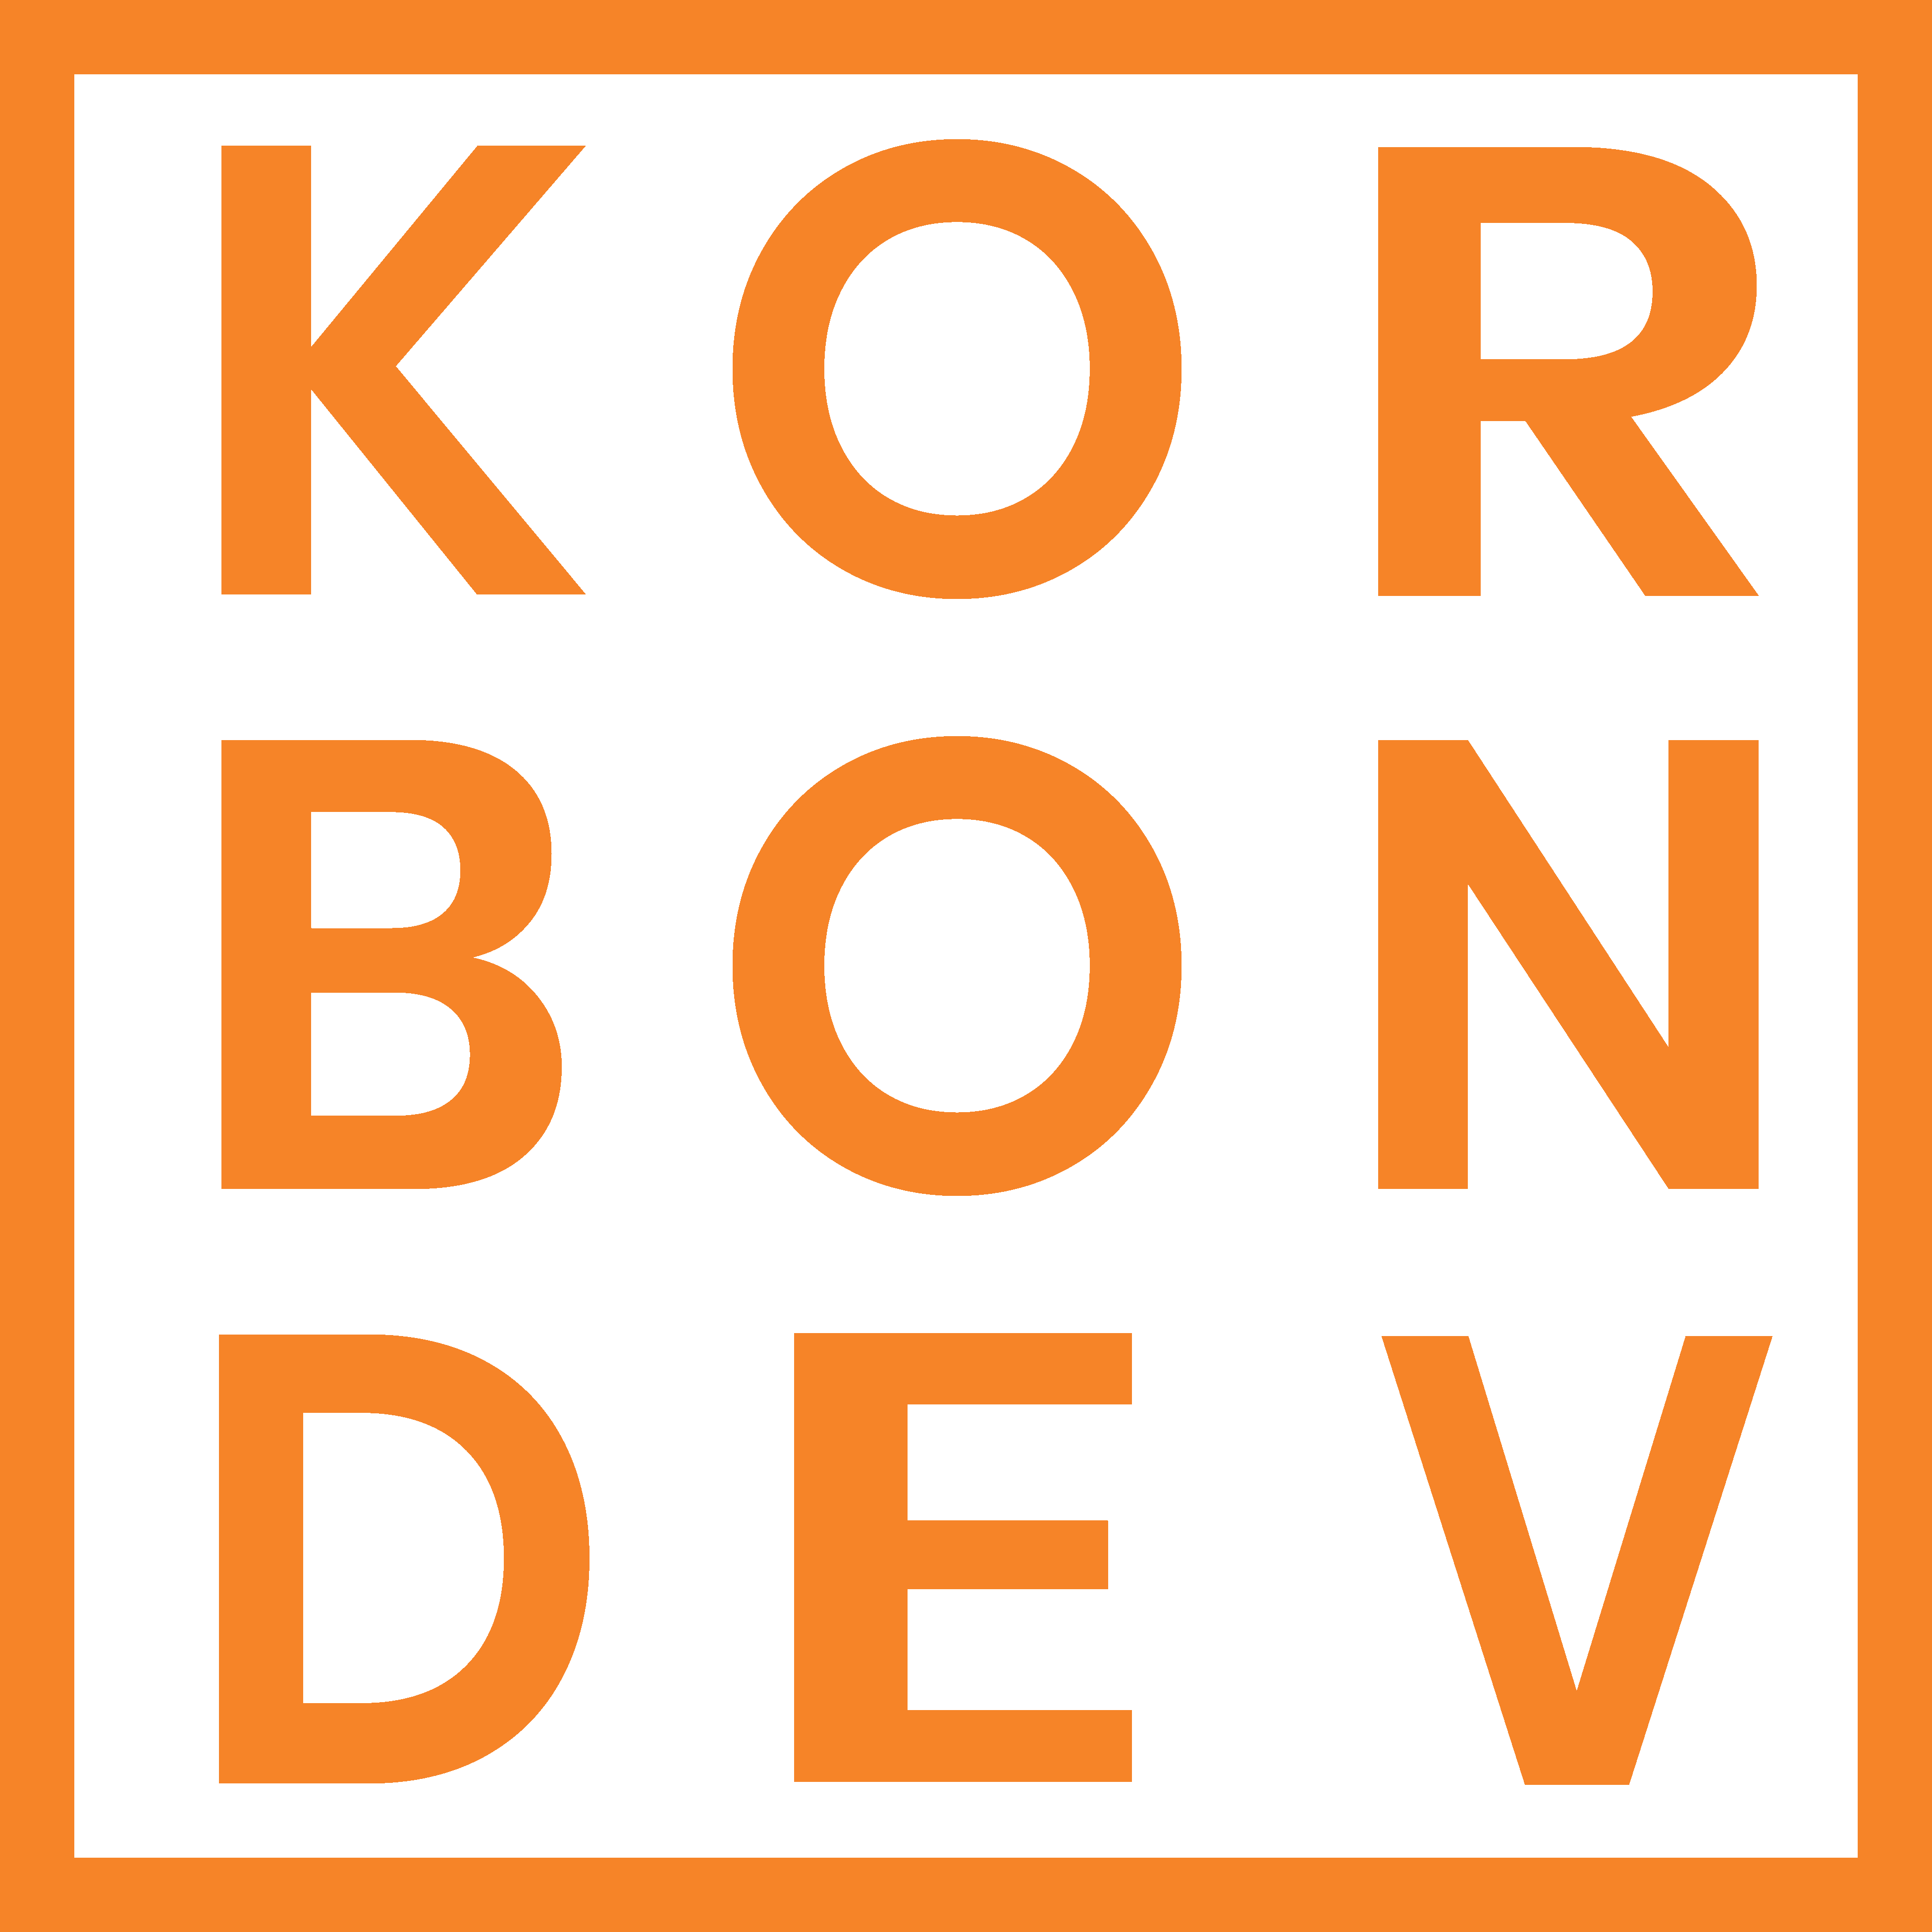 KB-logo